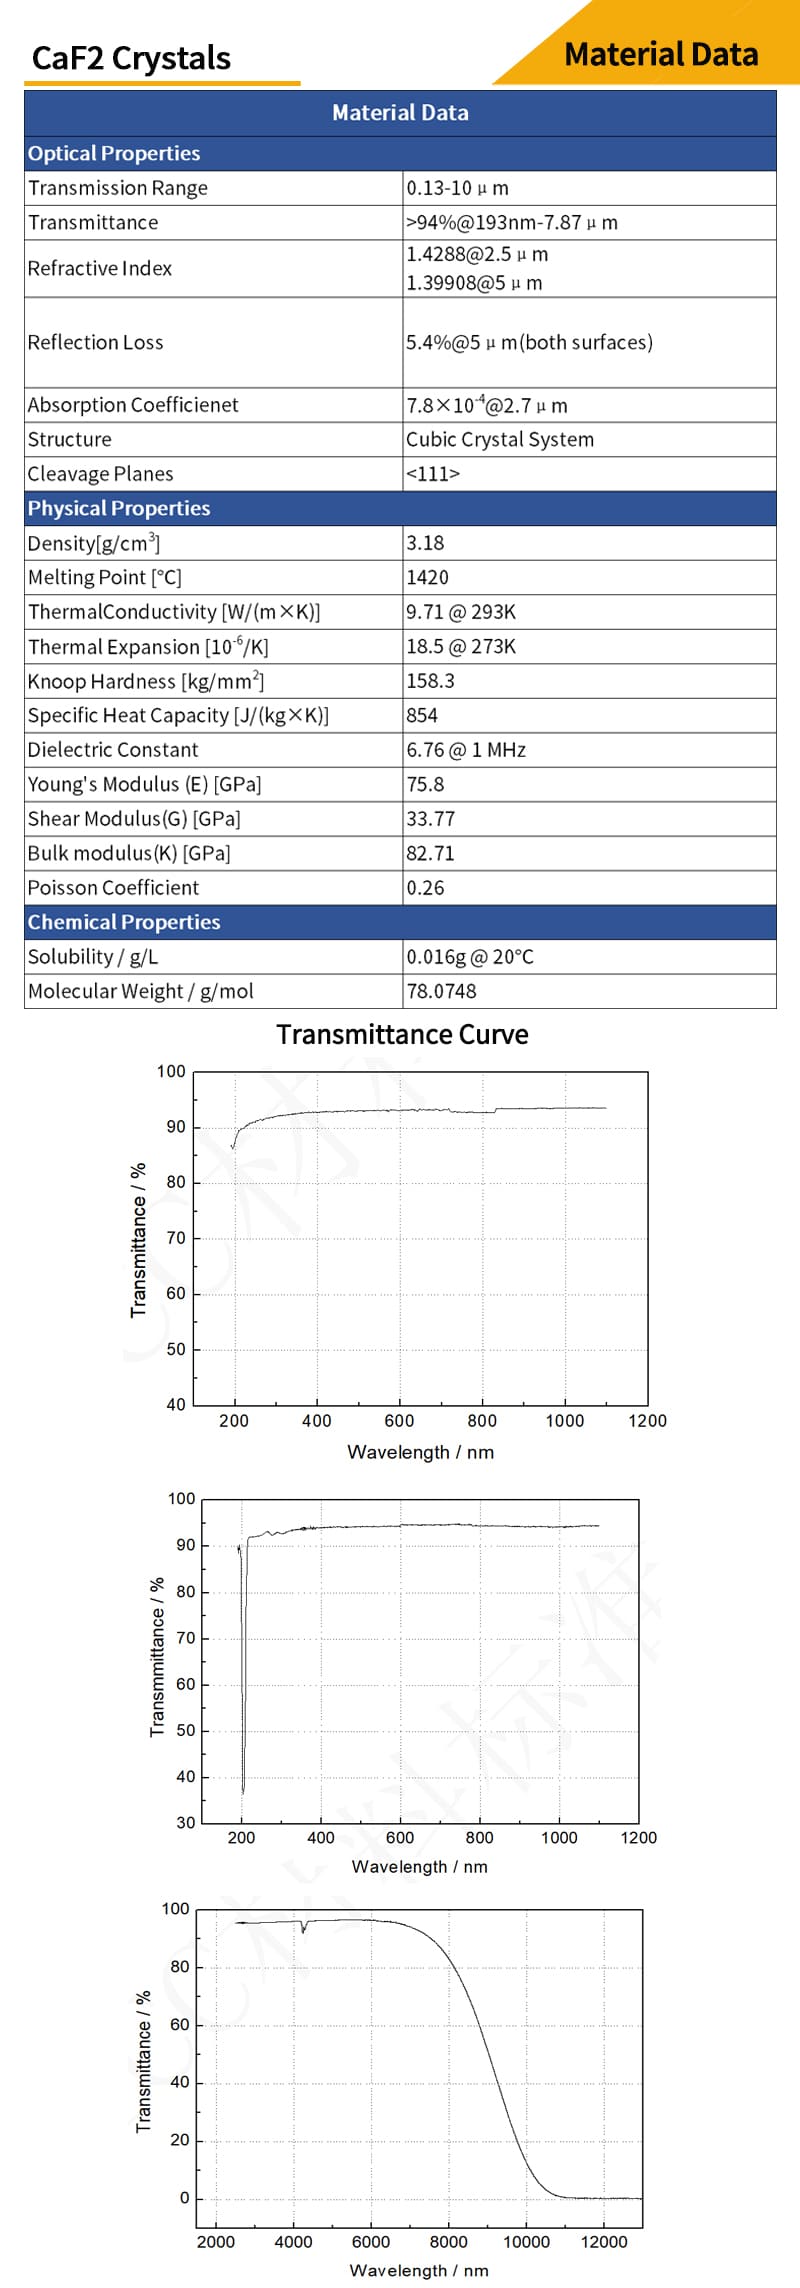 Calcium fluoride rectangular window material data and transmittance curves